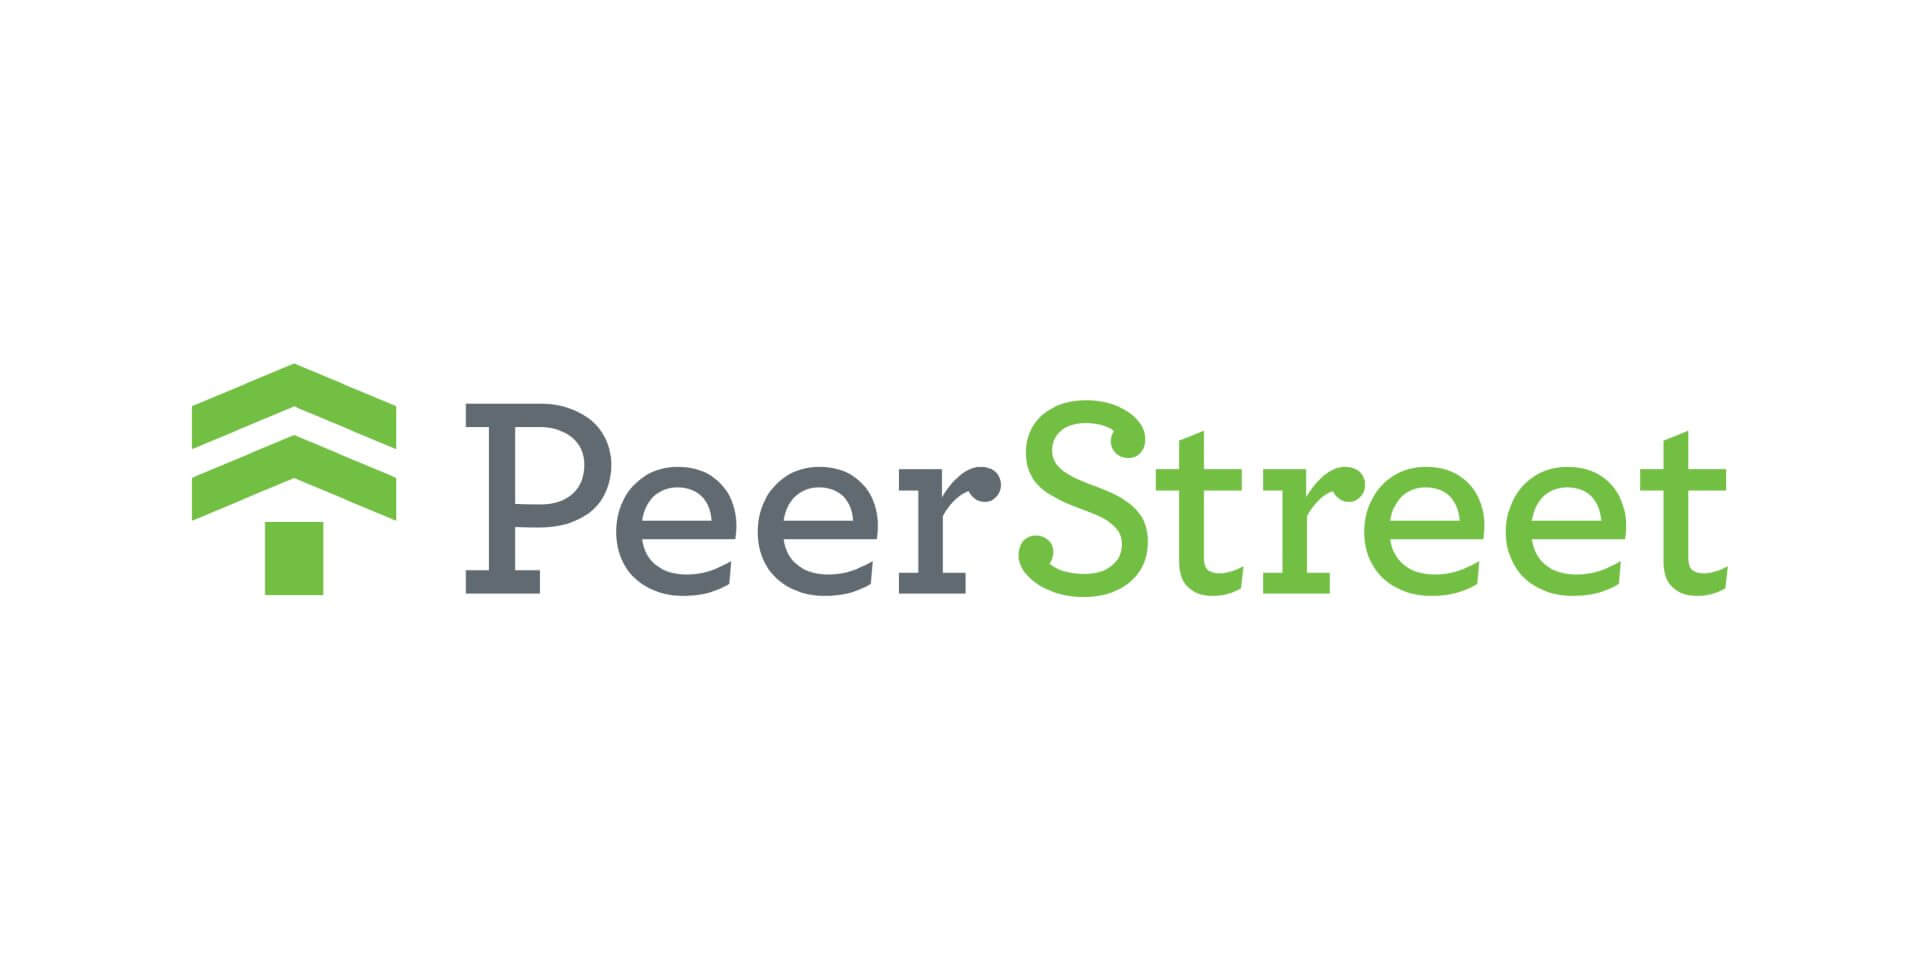 PeerStreet Logo